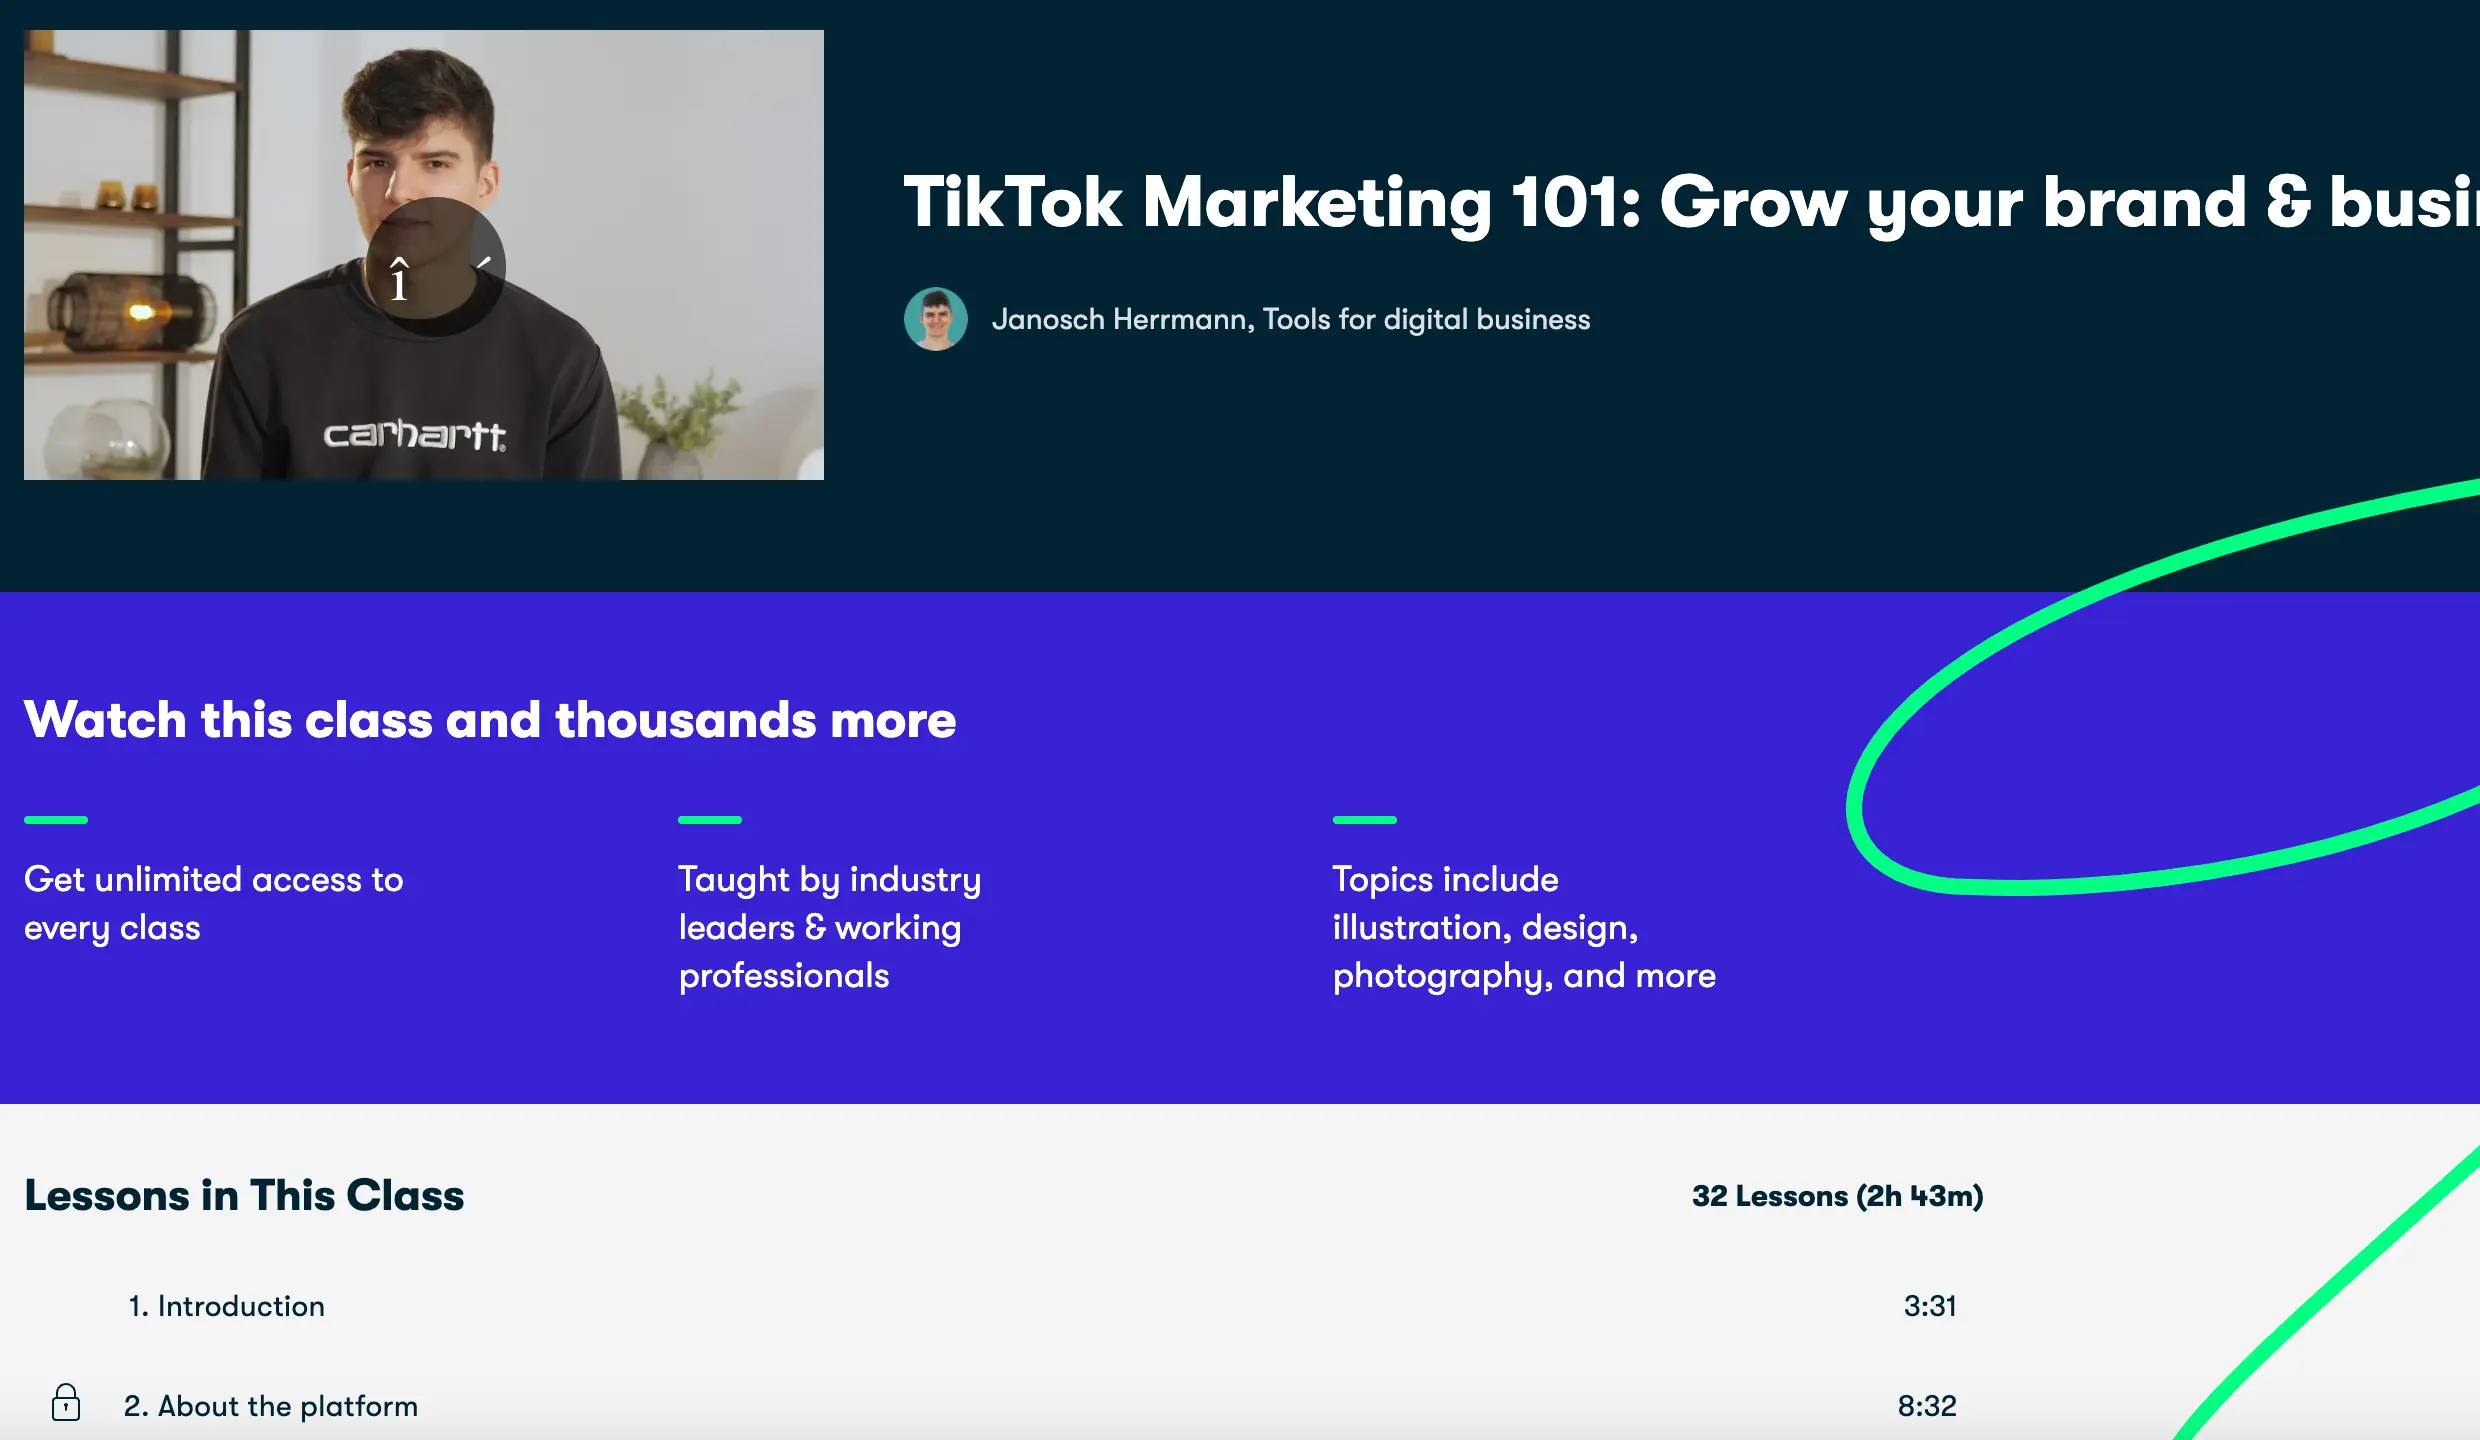 TikTok Marketing 101: Grow your brand & business